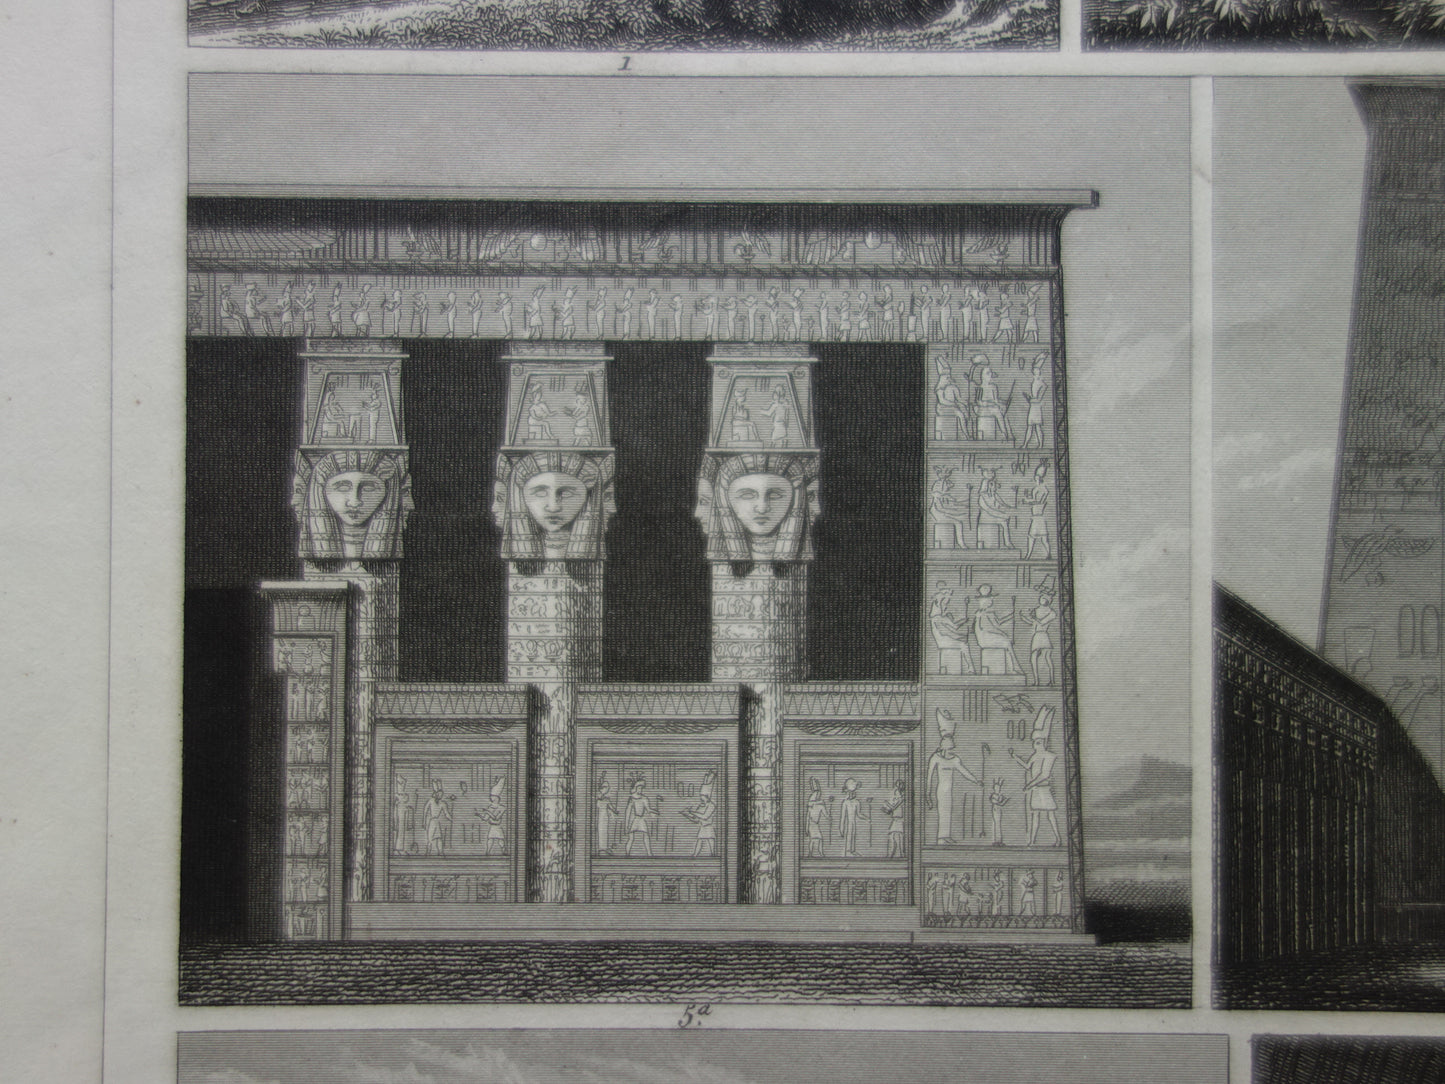 Oude prent Egypte Edfu Tempel Antieke Architectuur Print Karnak Dendera tempels illustratie